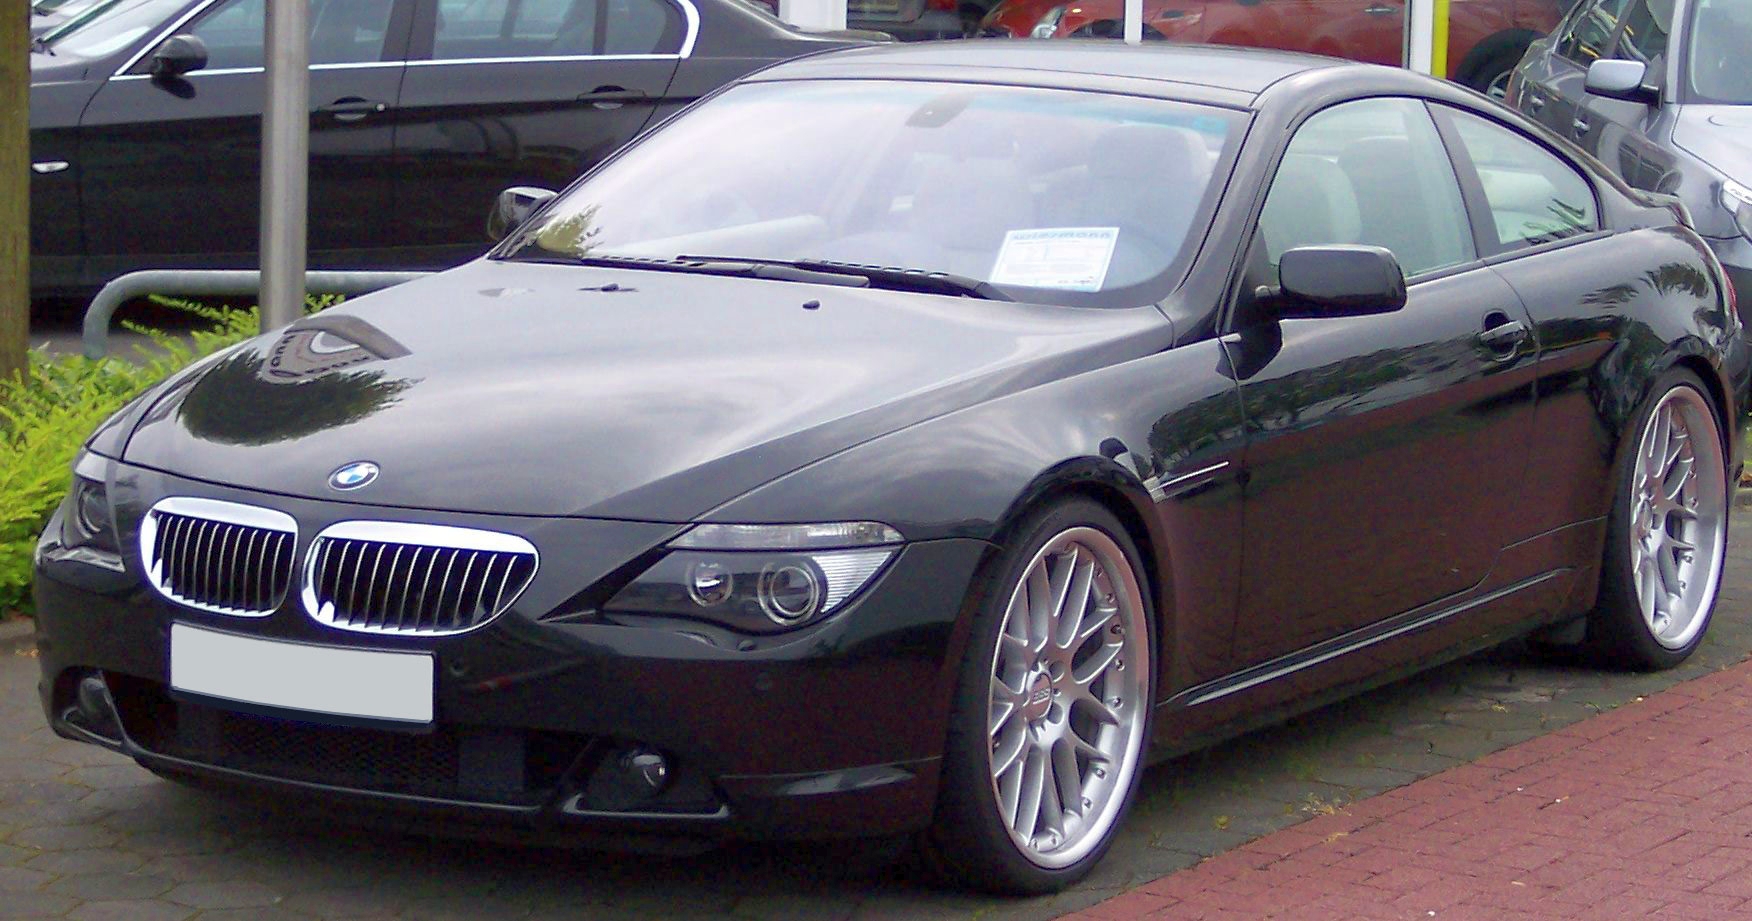 File:BMW Series6 black vl.jpg